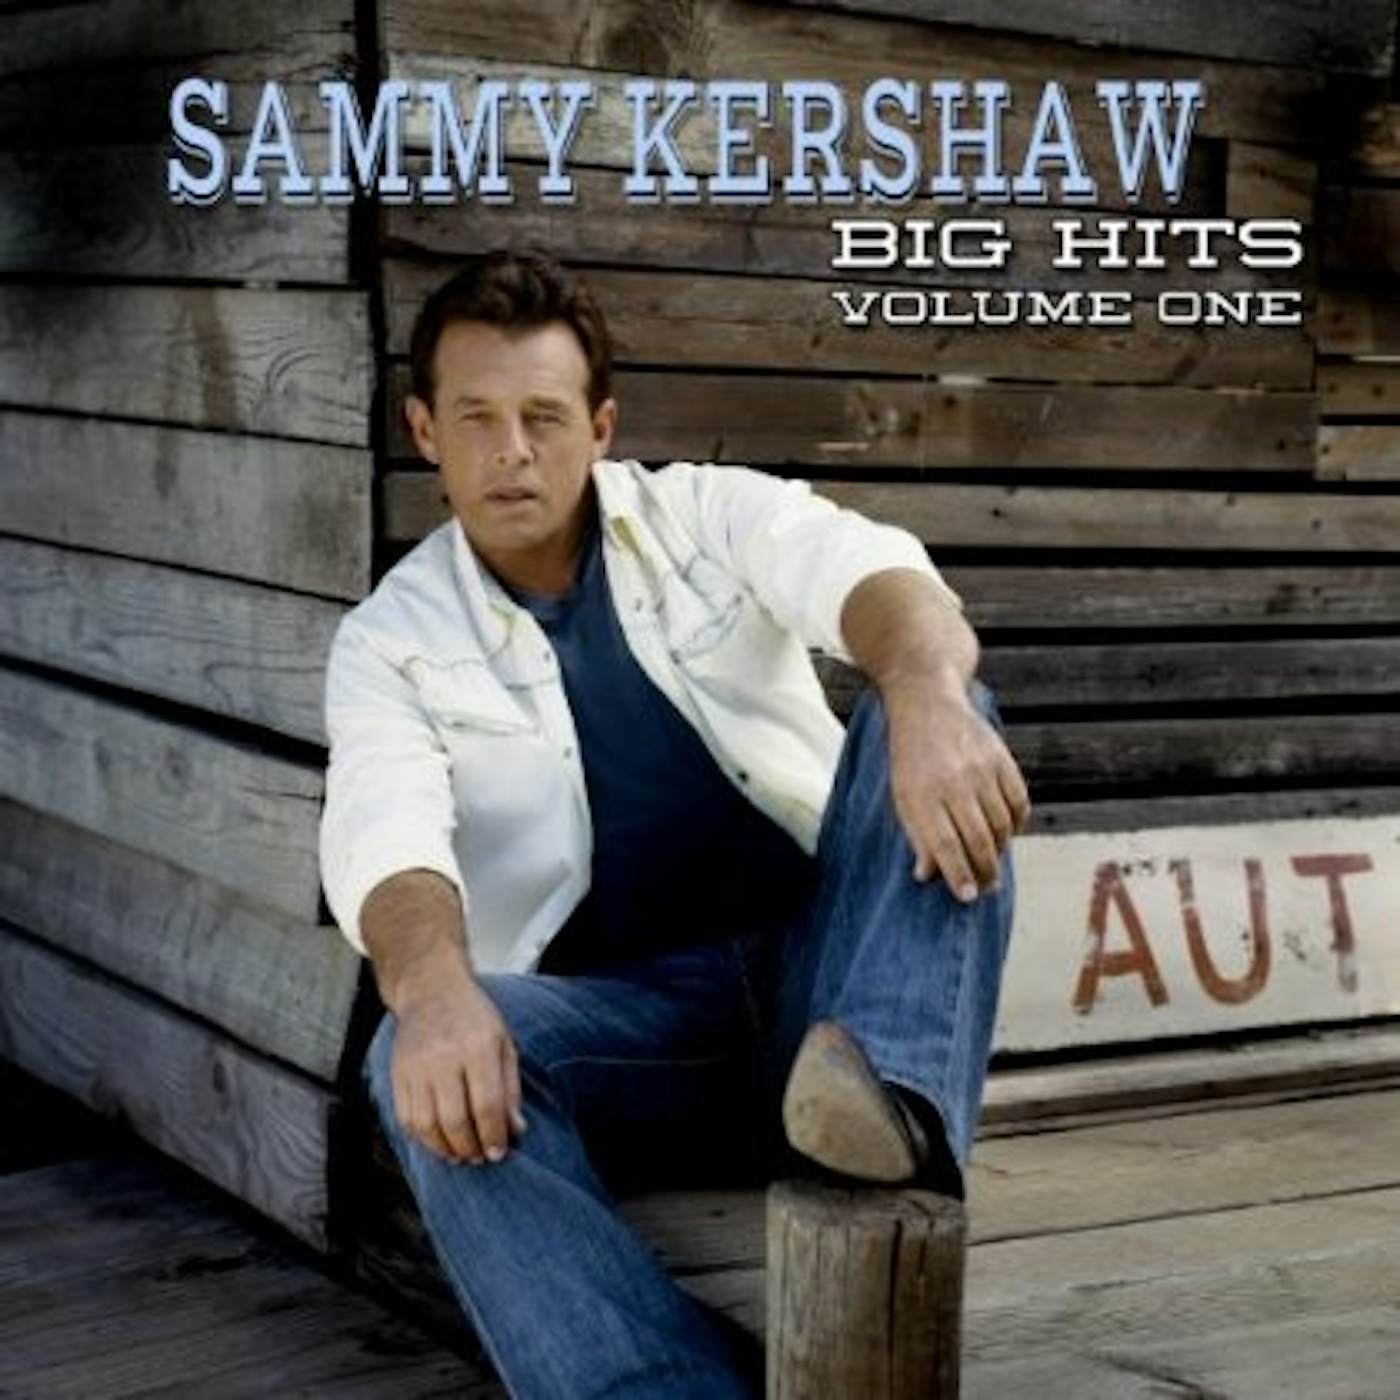 SAMMY KERSHAW BIG HITS 1 CD